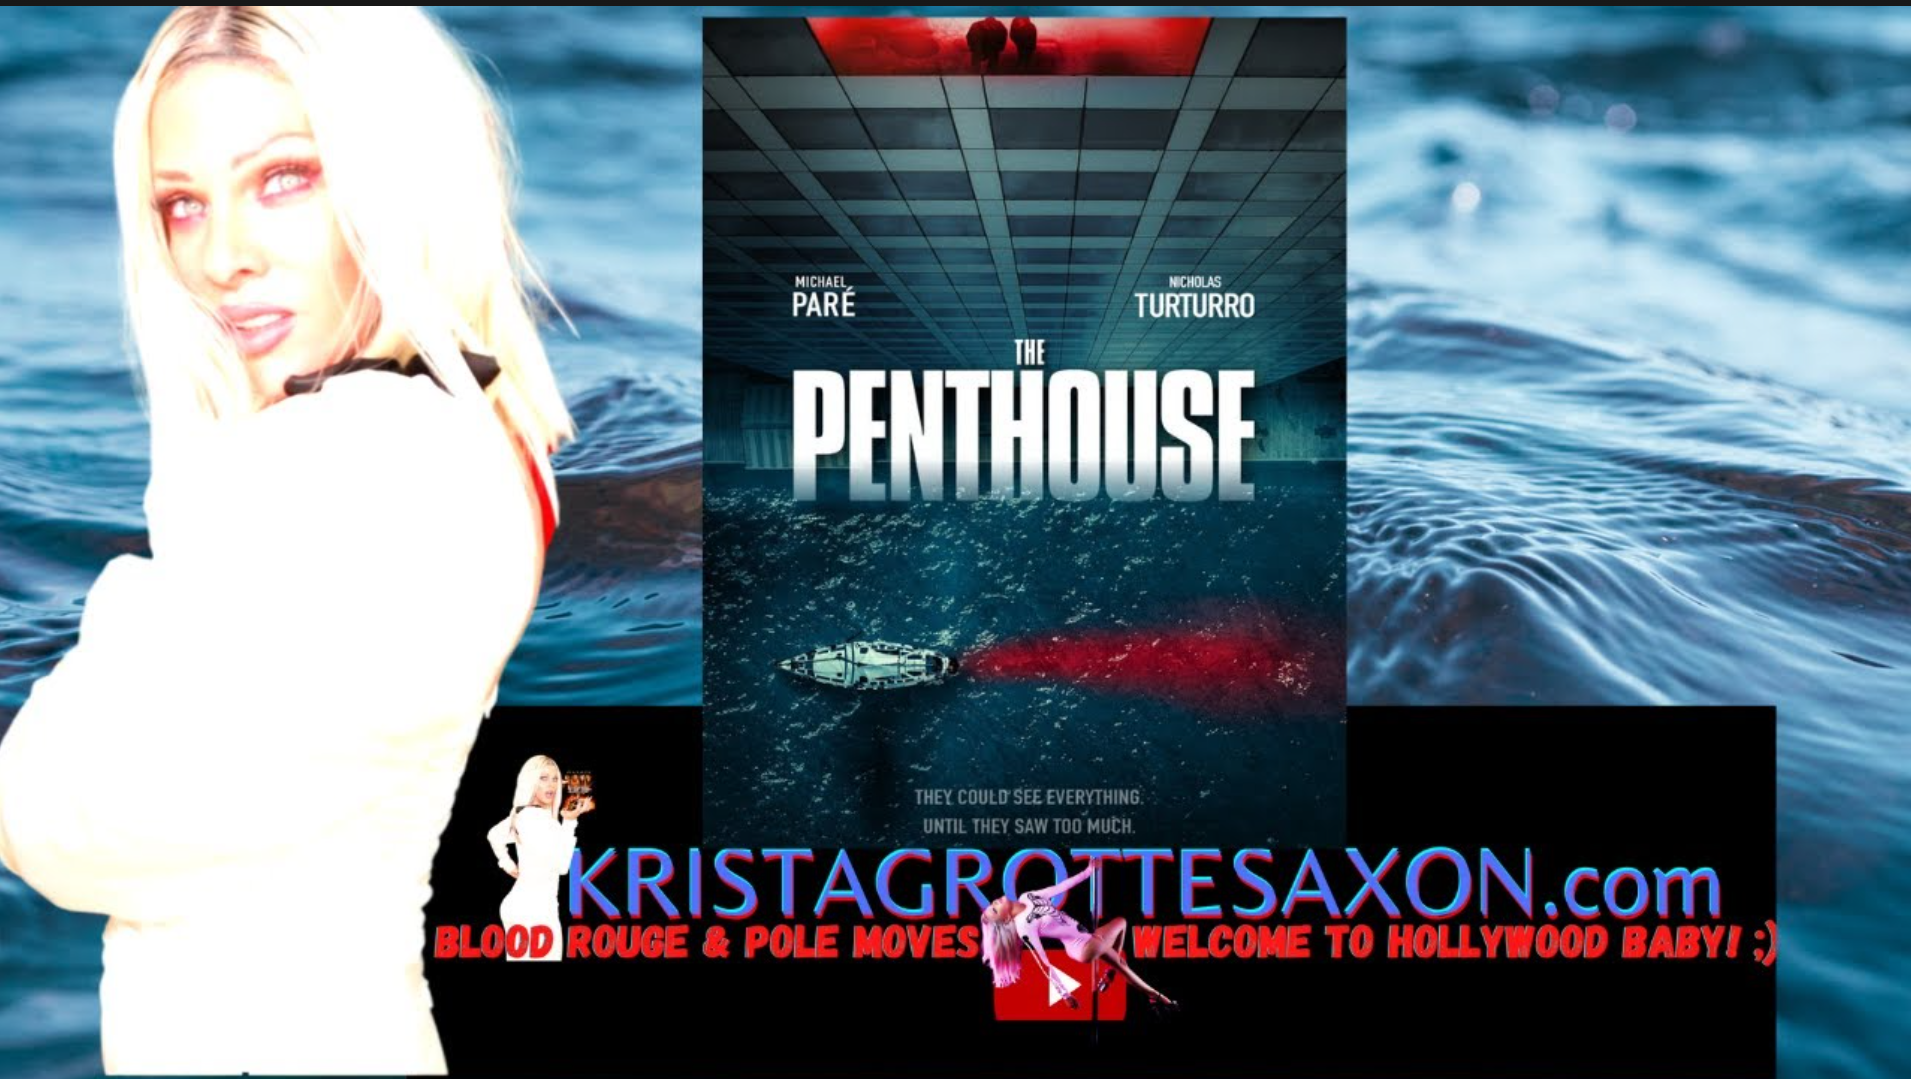 Krista Grotte Saxon The Penthouse Movie